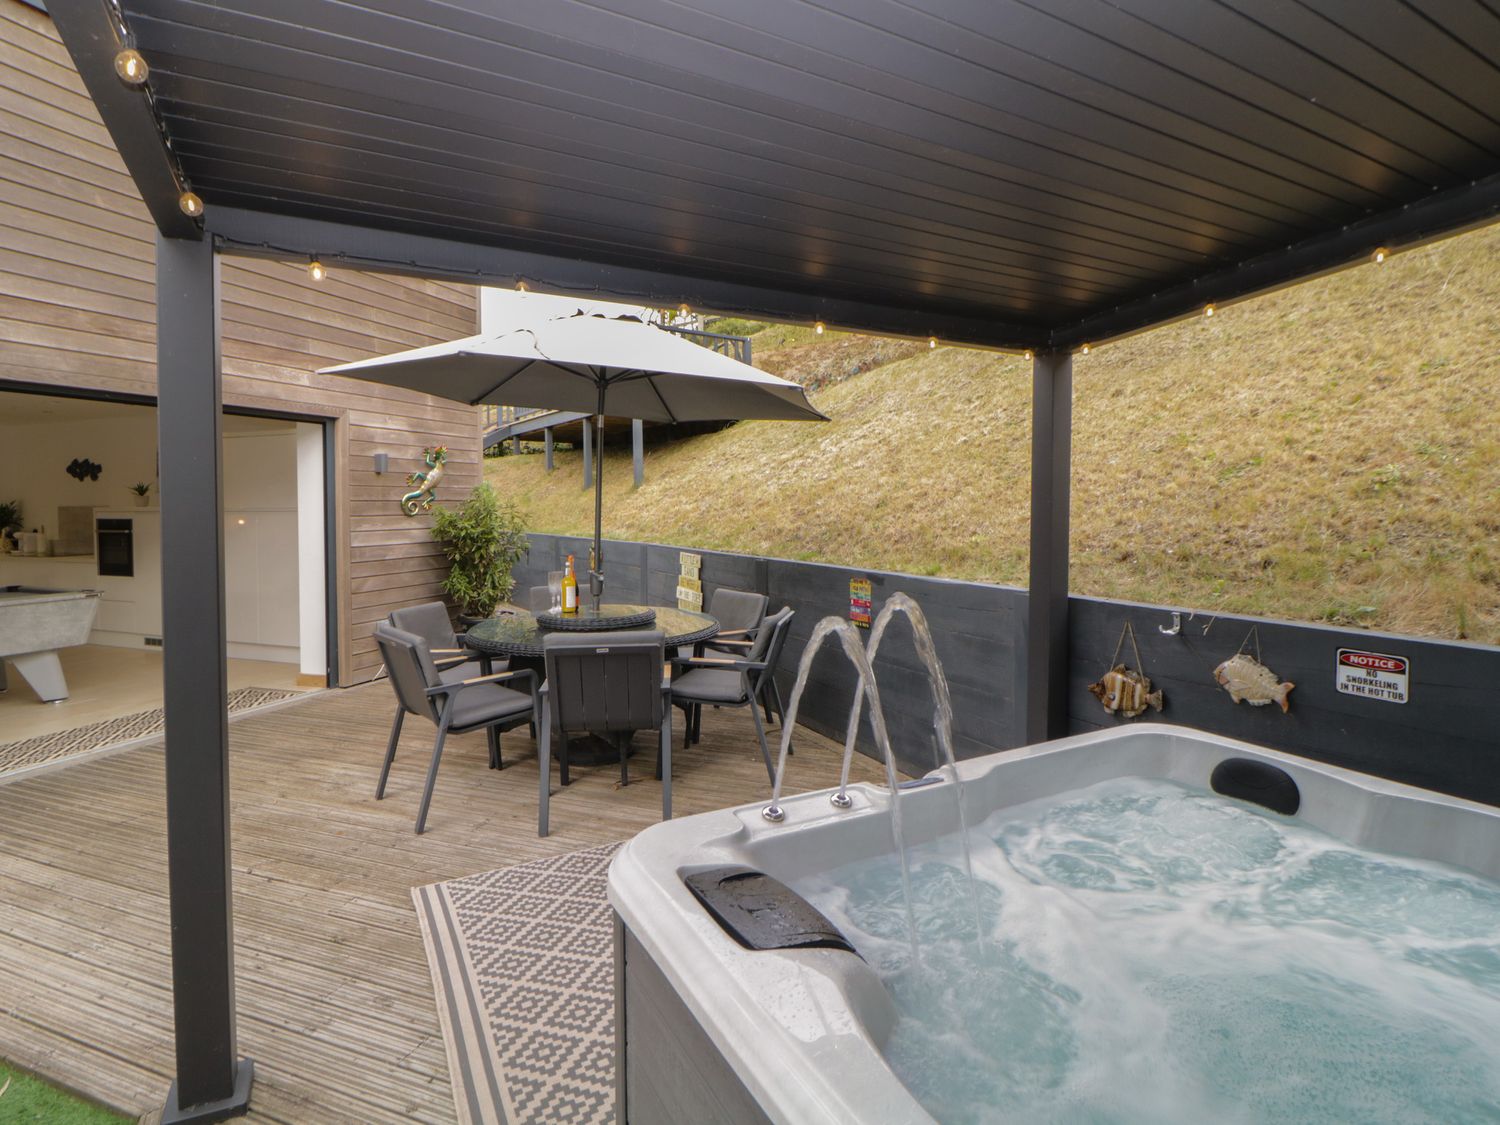 12 Beachdown, Challaborough, Devon. Four-bedroom, contemporary home with countryside views. Hot tub.